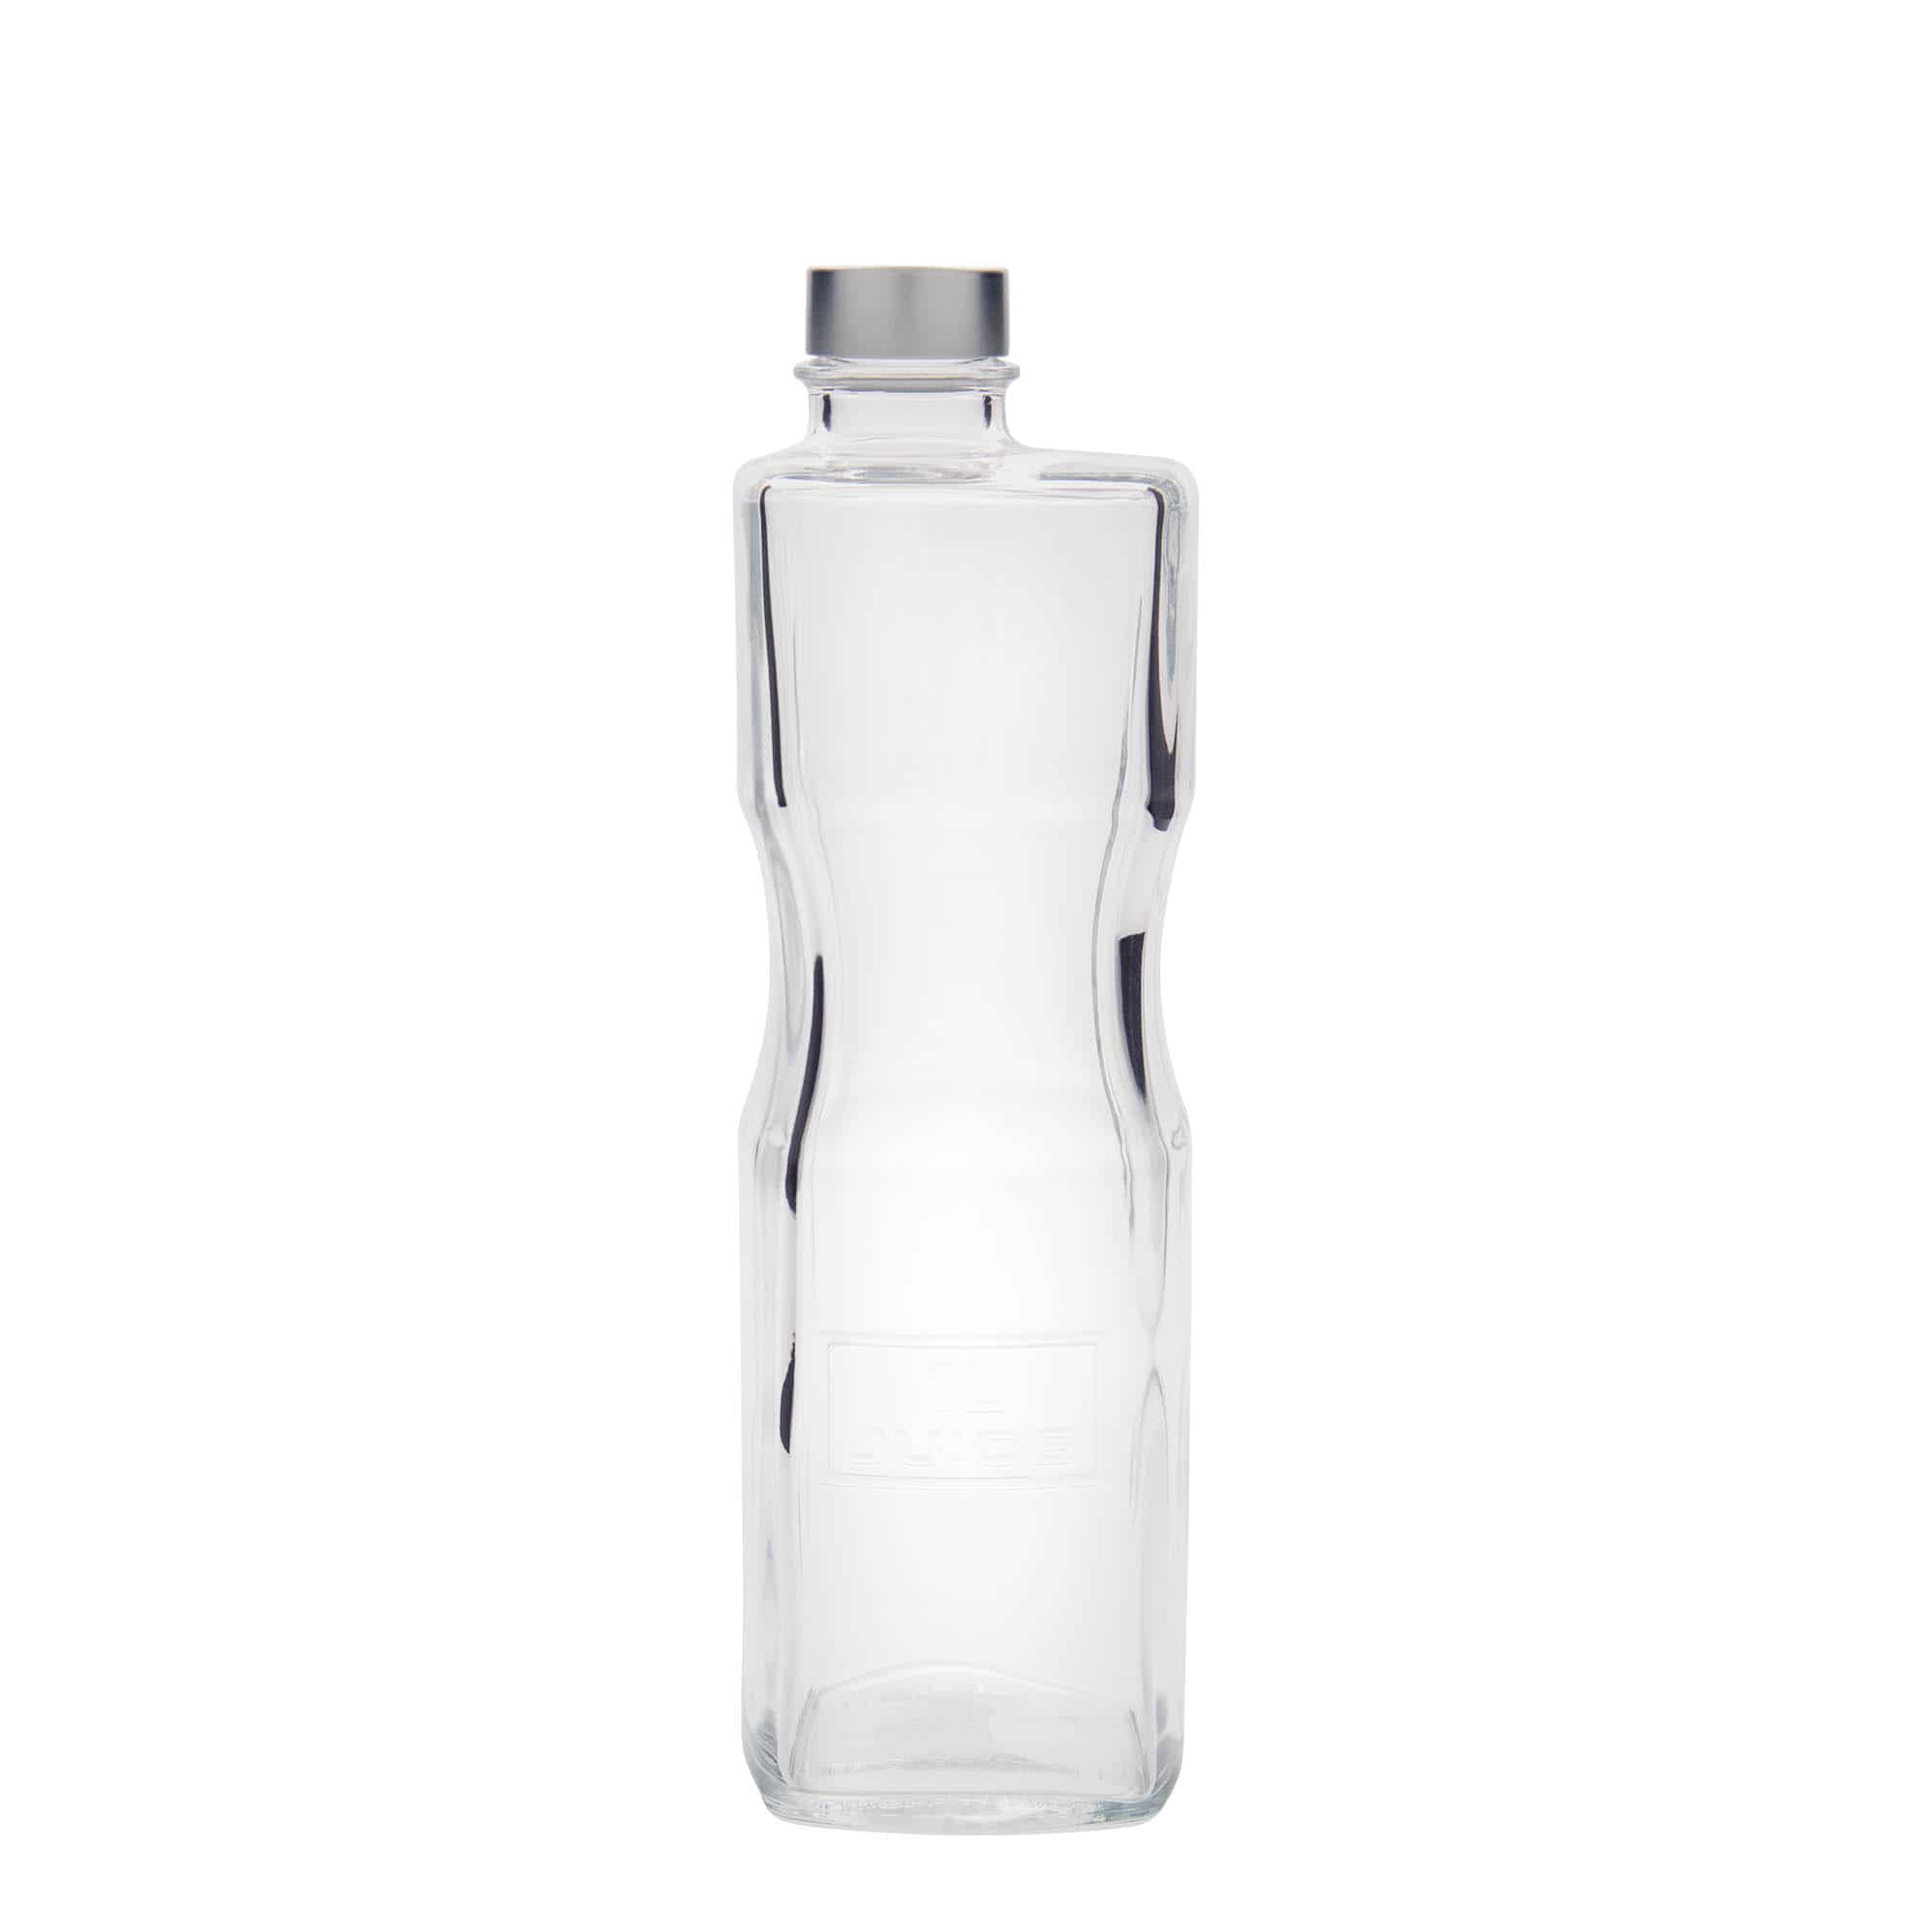 1,000 ml glass bottle 'Optima Juice', rectangular, closure: screw cap